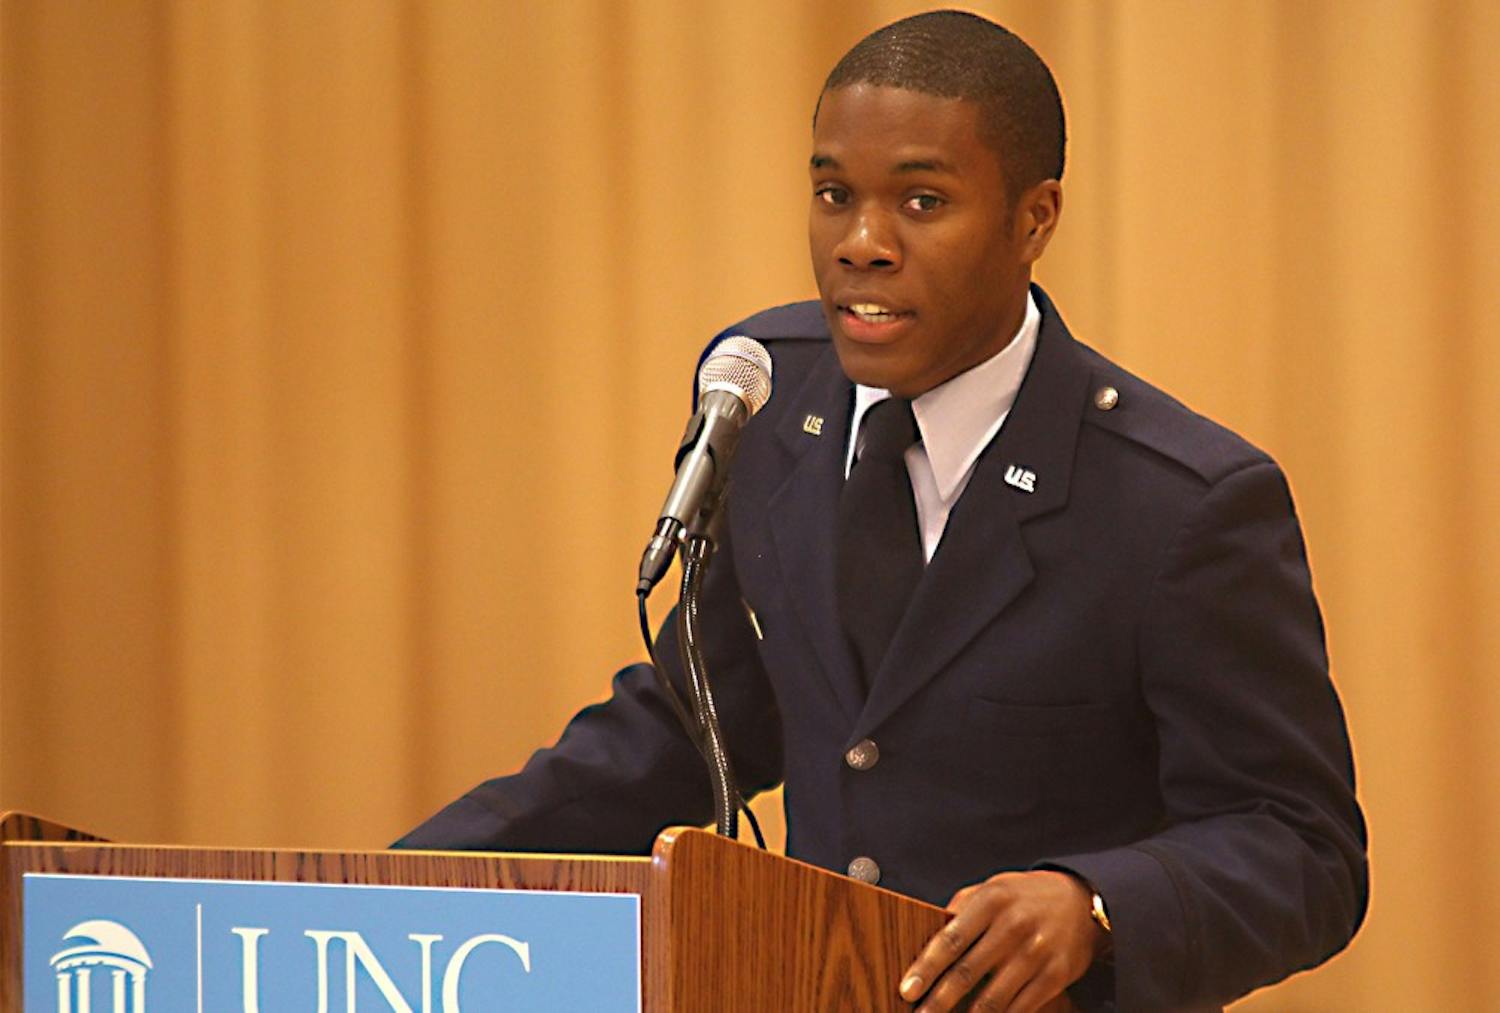 Cadet Micah Paulson gave the opening remarks at the inaugural military graduation. 